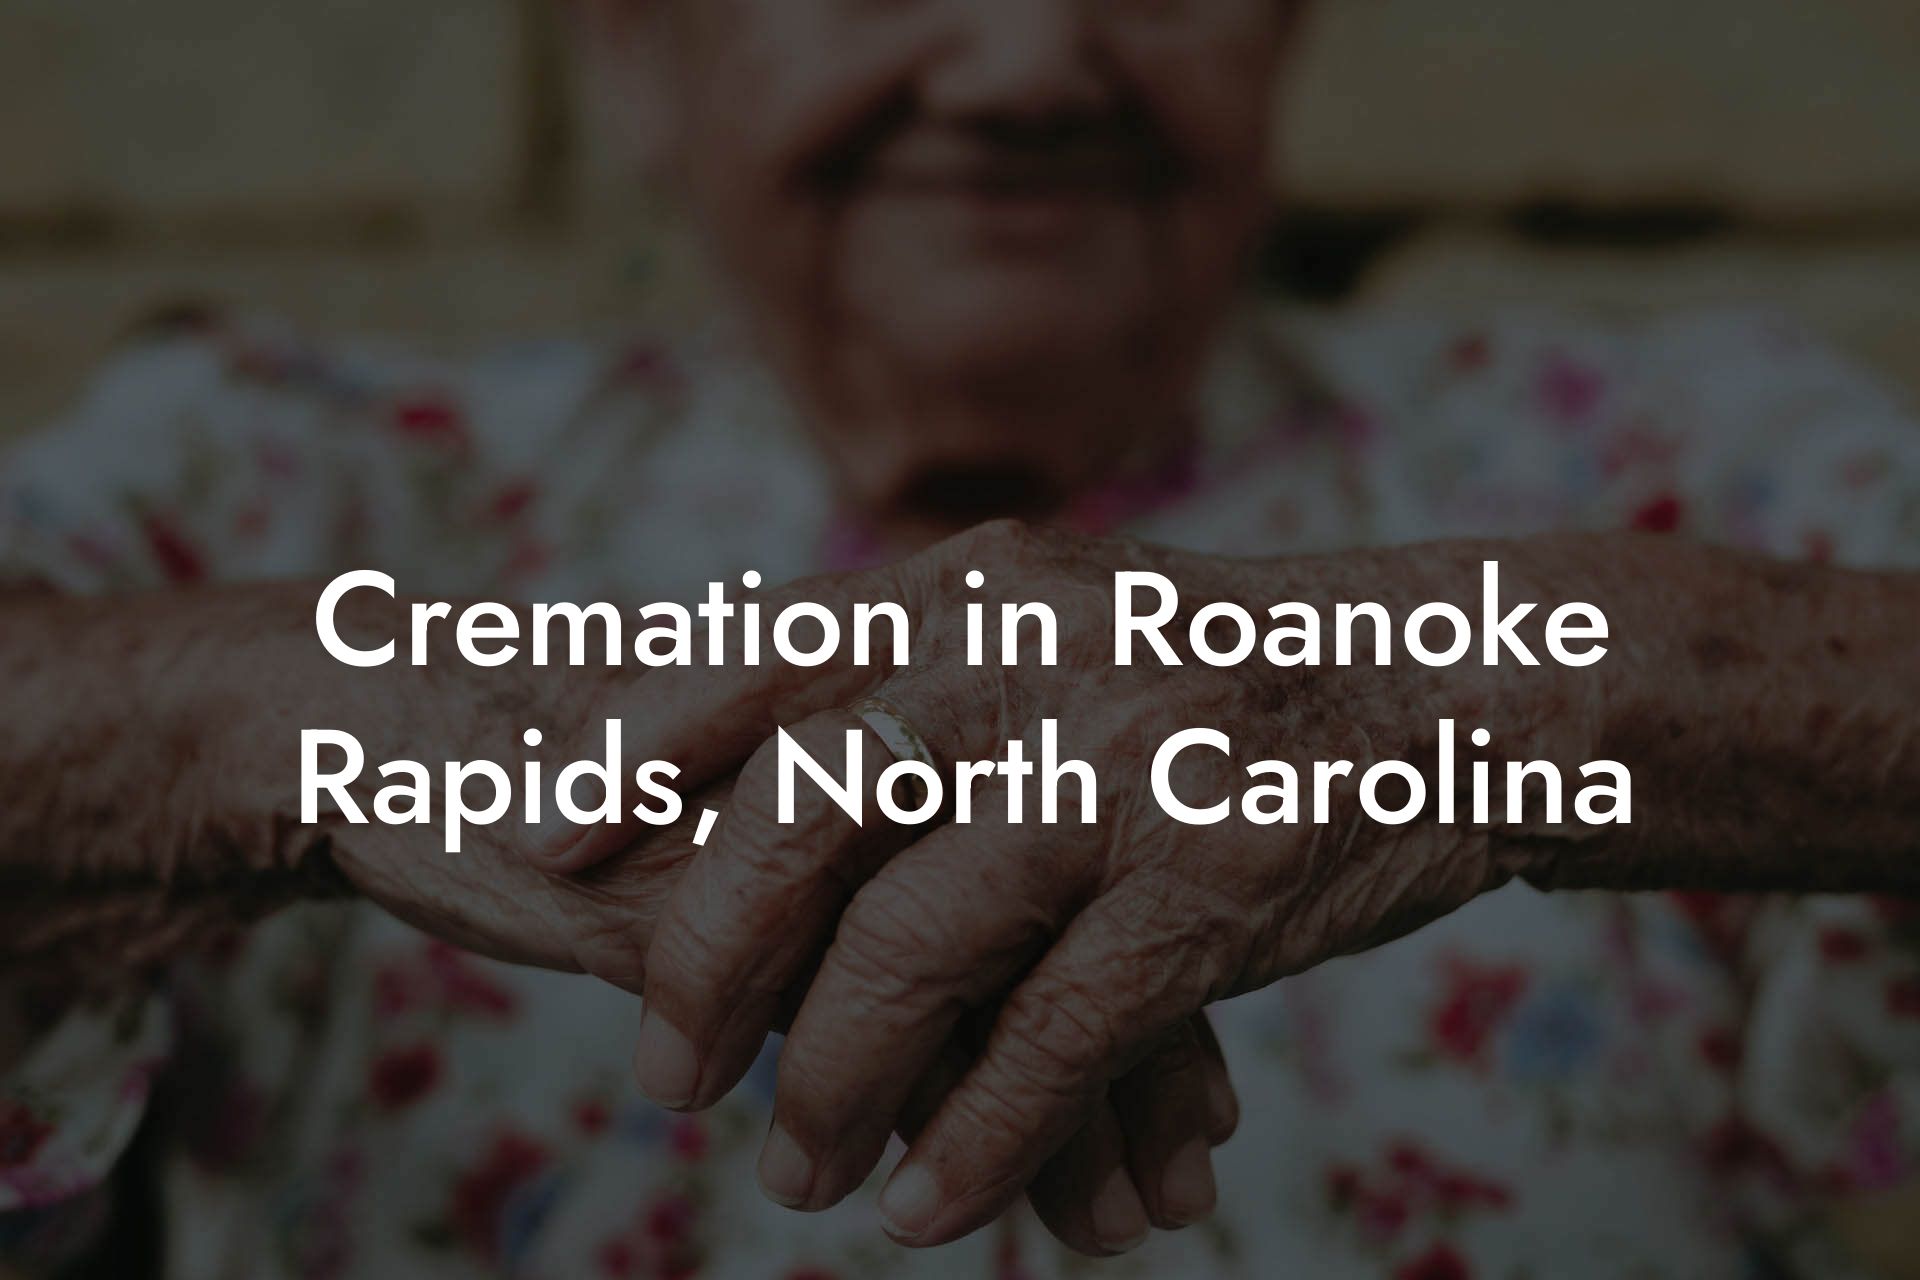 Cremation in Roanoke Rapids, North Carolina